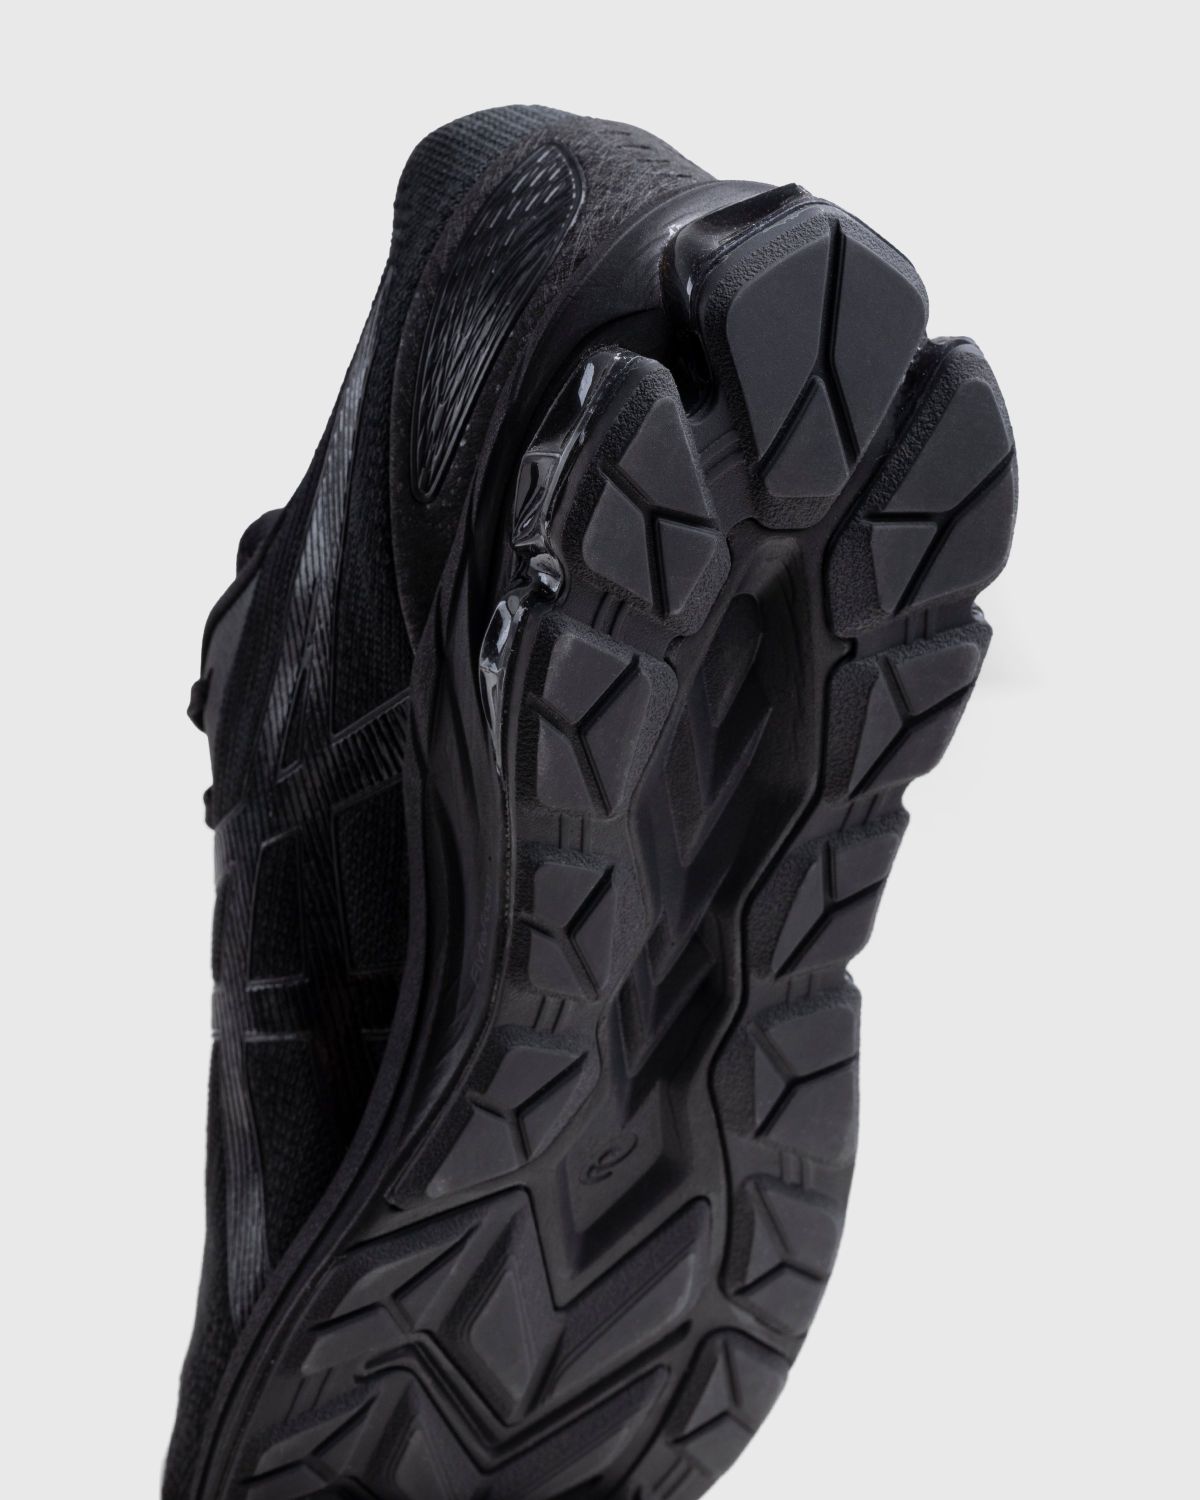 asics – Gel-Quantum 180 VII Black/Black - Low Top Sneakers - Black - Image 6